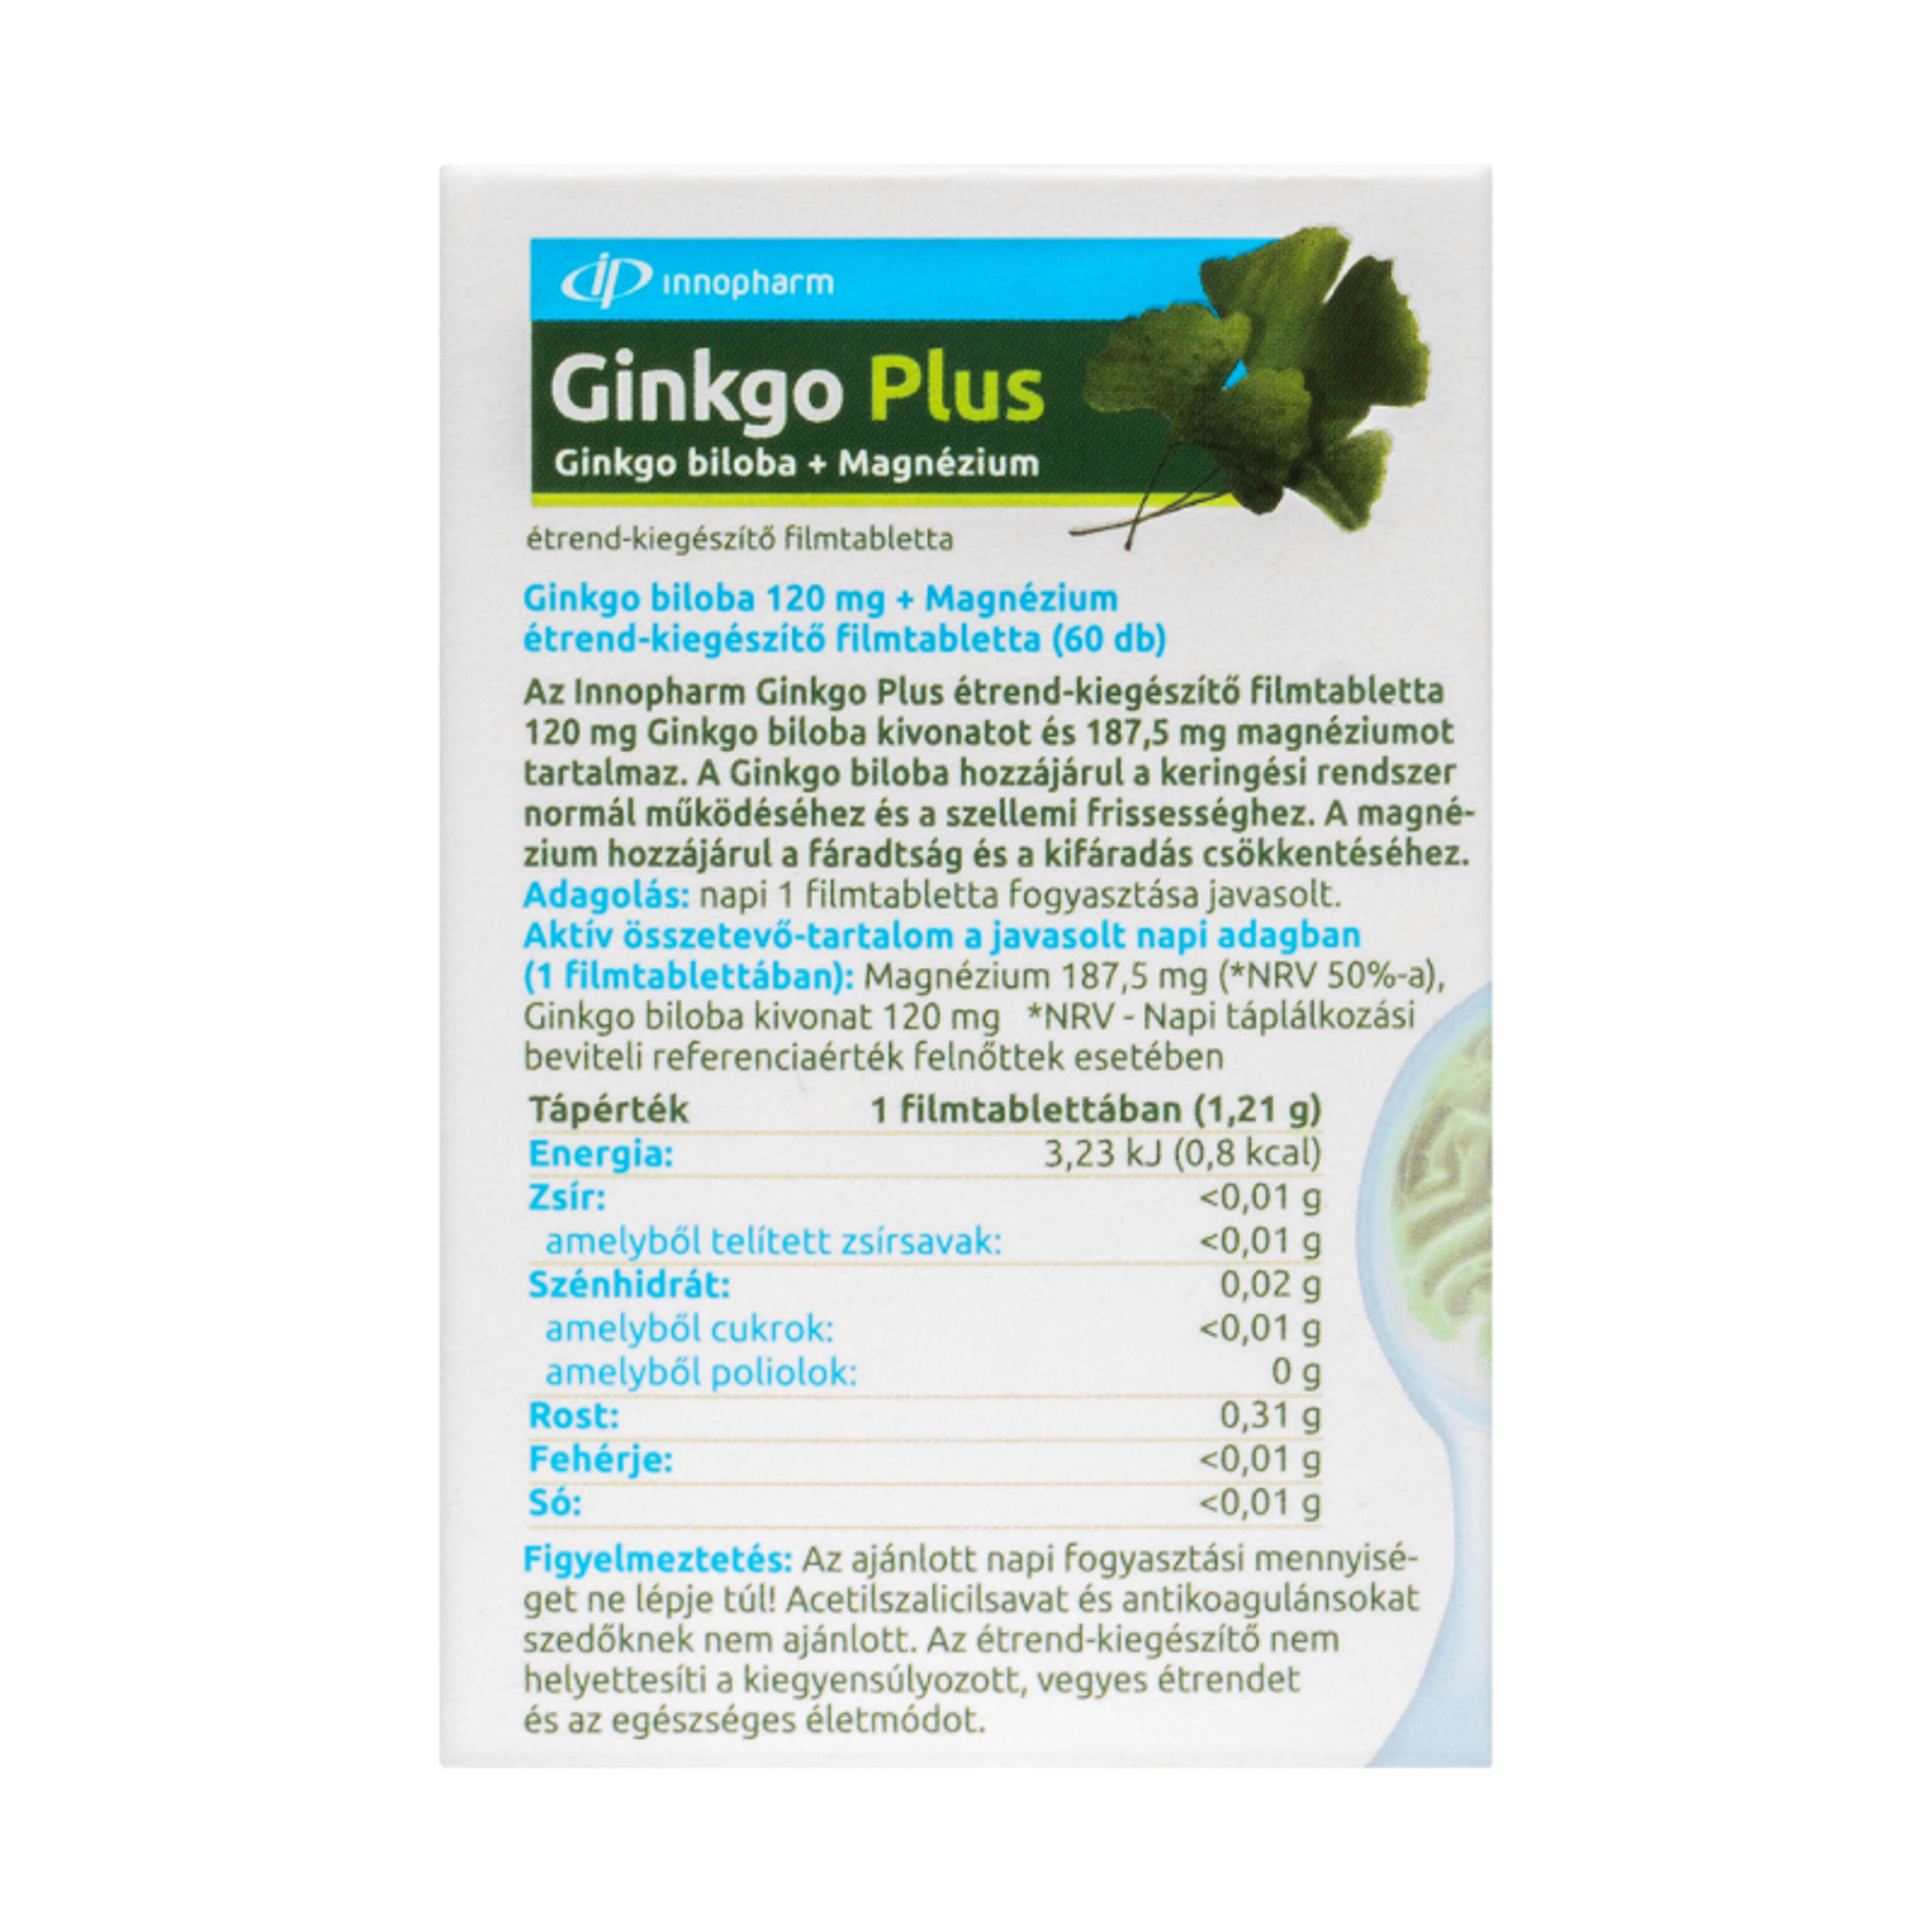 InnoPharm Ginkgo Plus Ginkgo biloba 120 mg + magnézium filmtabletta - 60 db-4